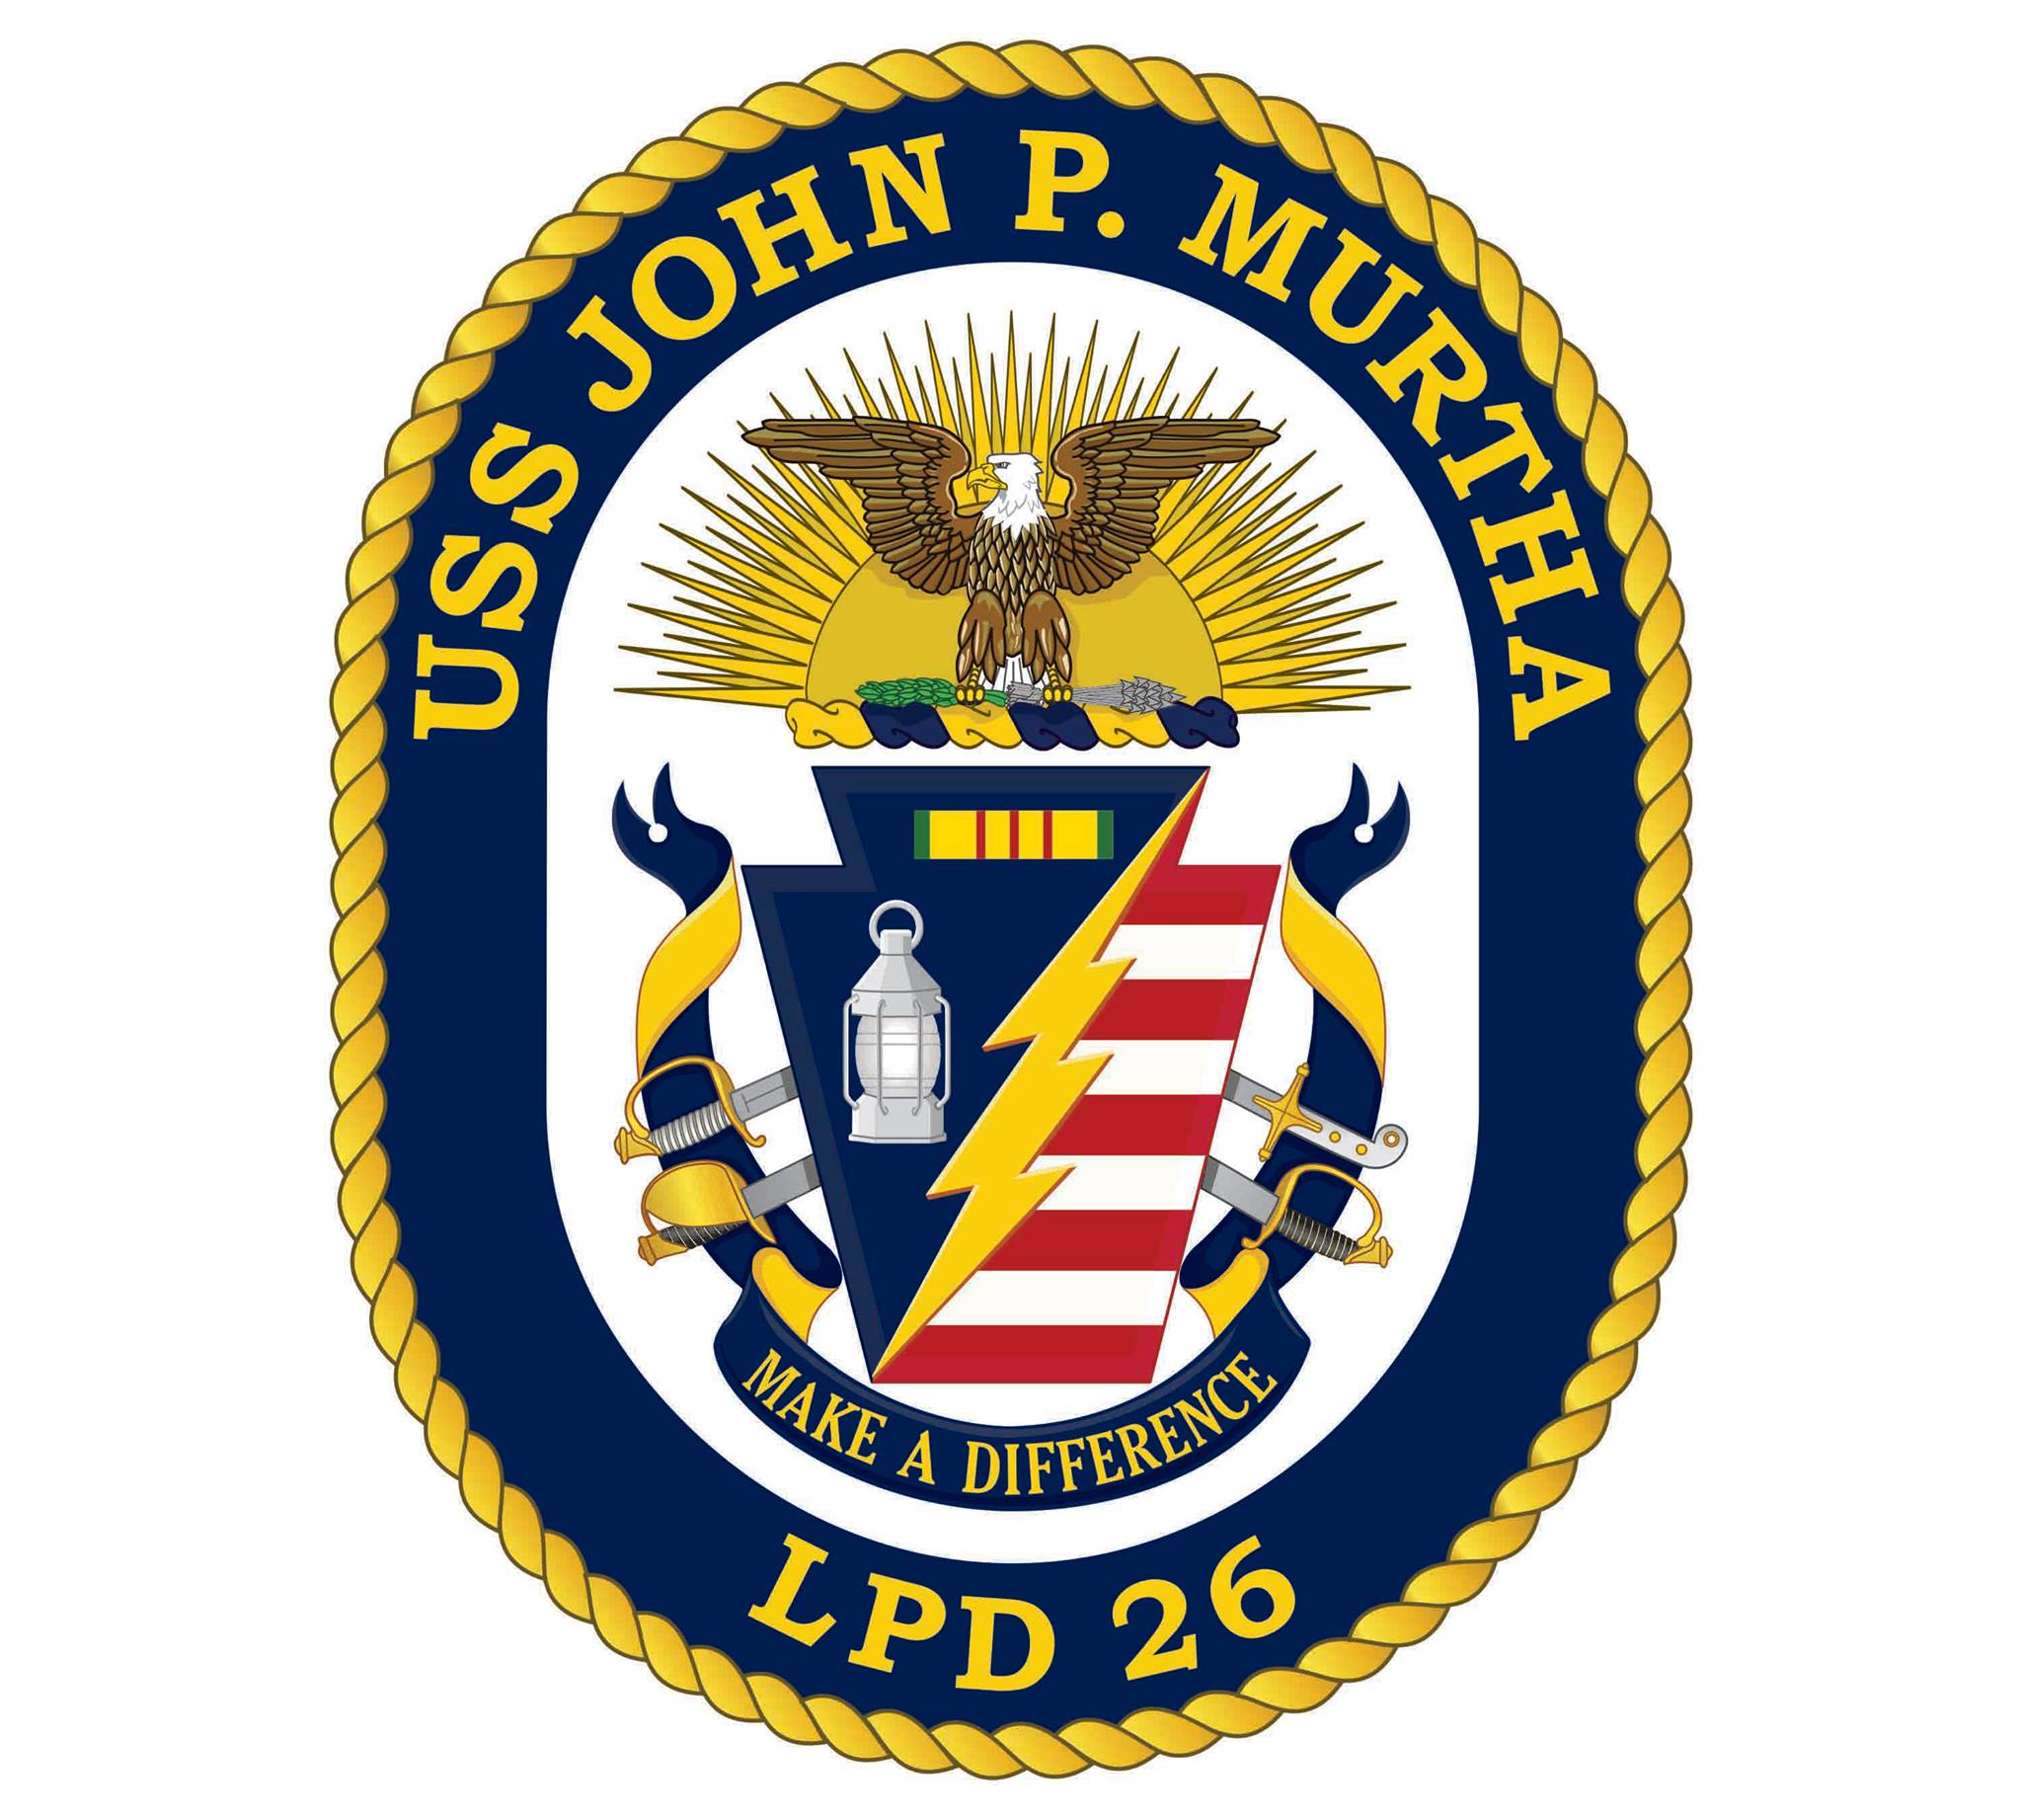 USS JOHN P. MURTHA LPD-26 Grafik: U.S. Navy